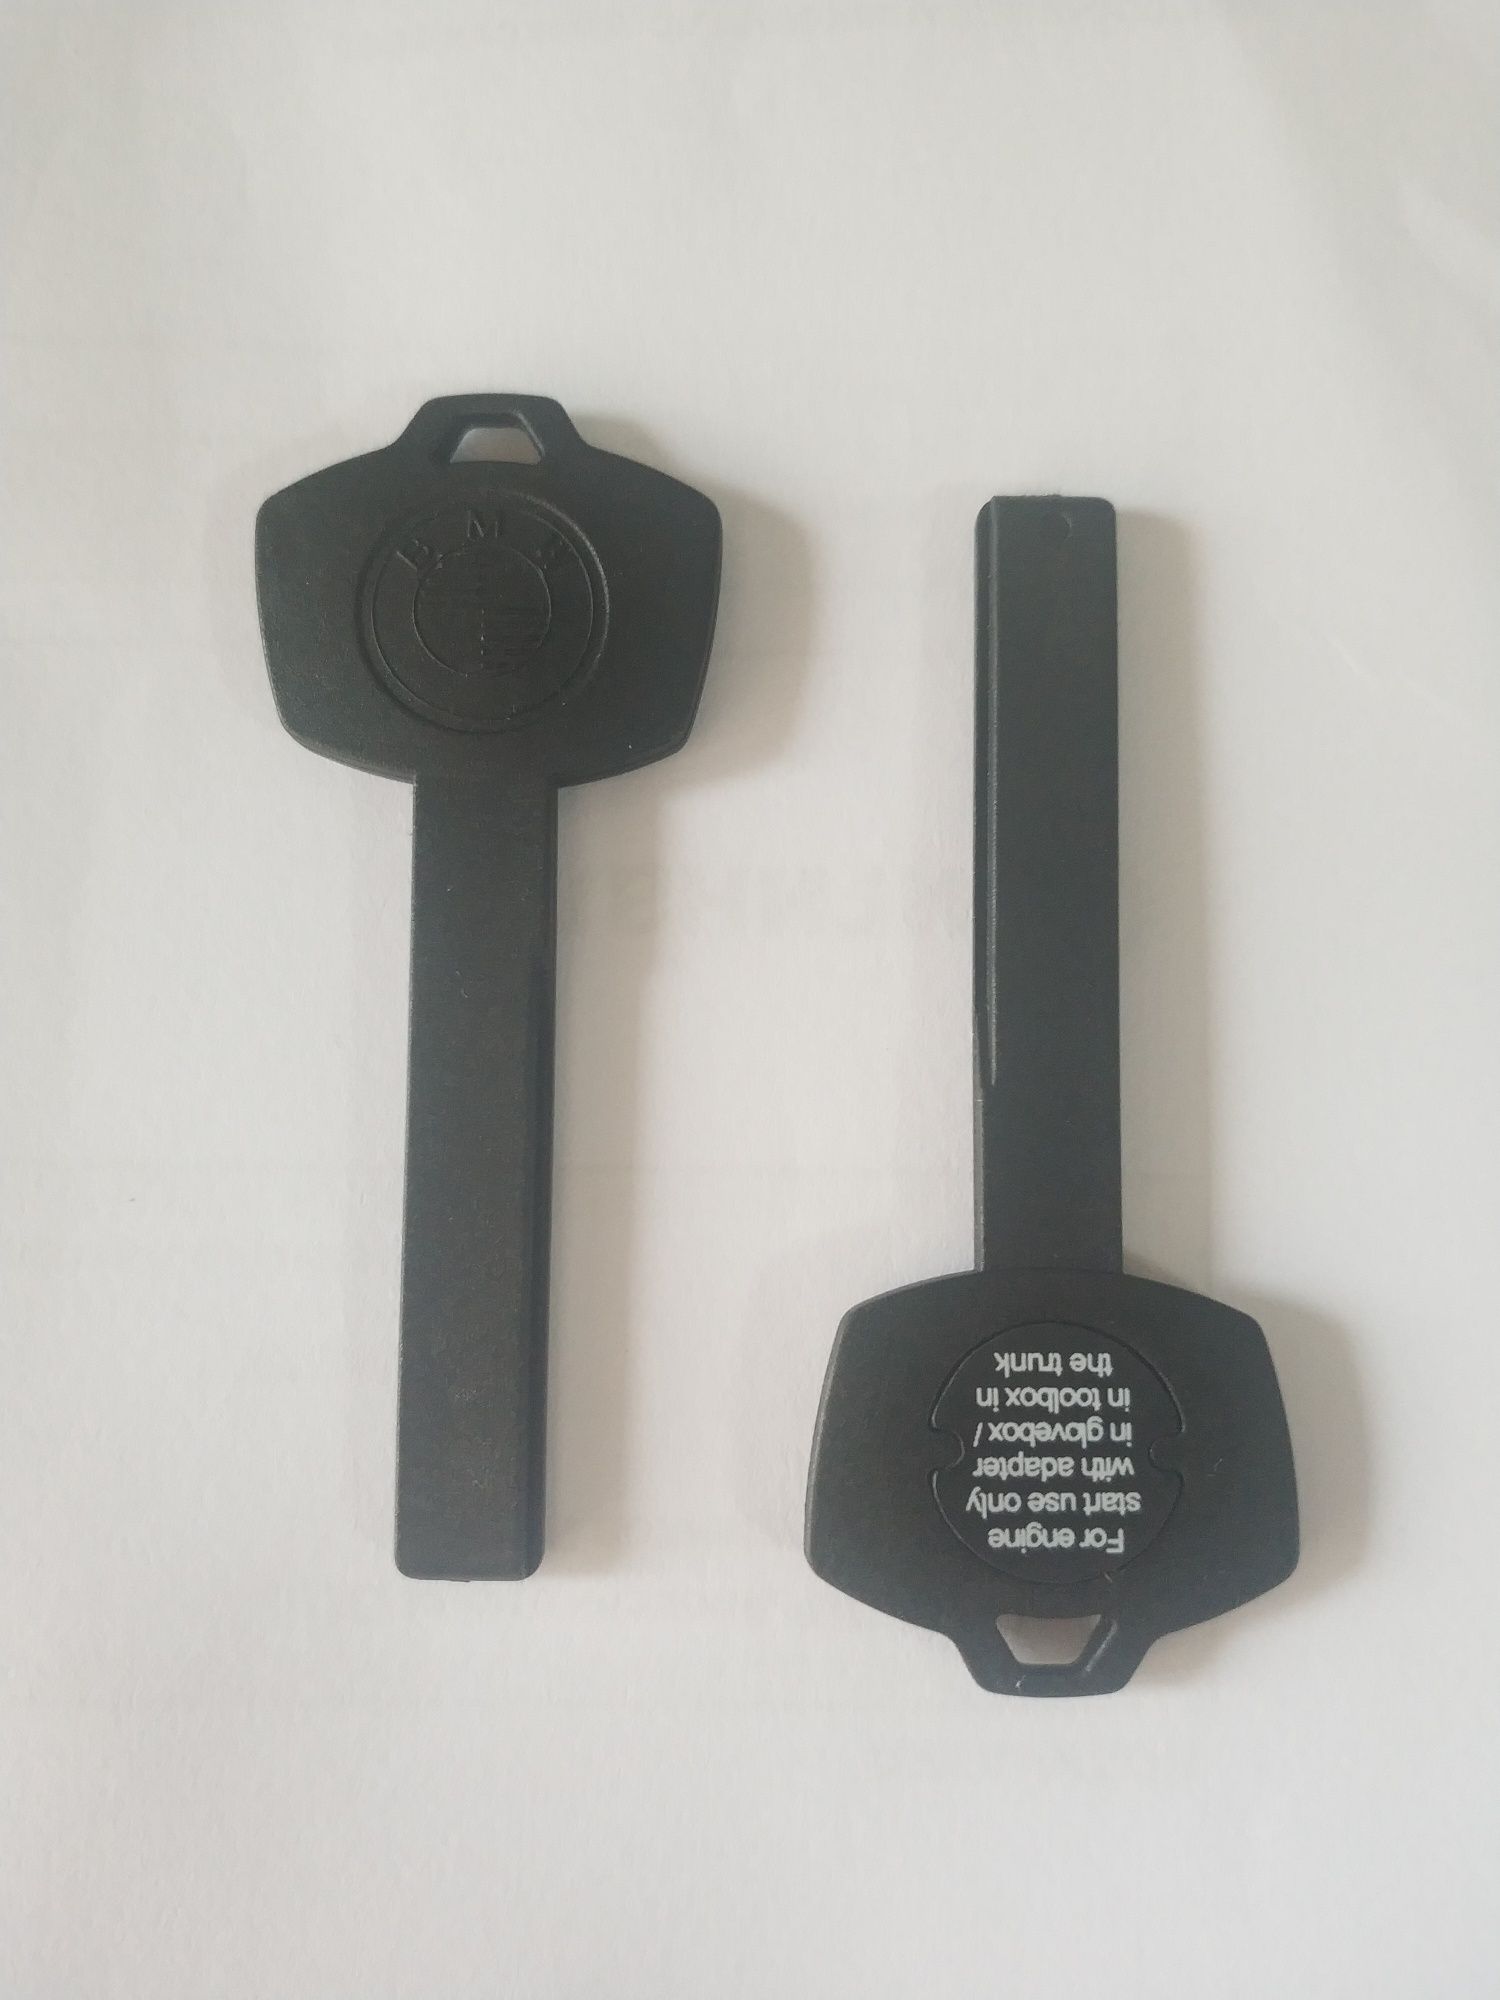 Ключ за bmw - пластмасов valet key (плажен ключ)  bmw cas 2 само!